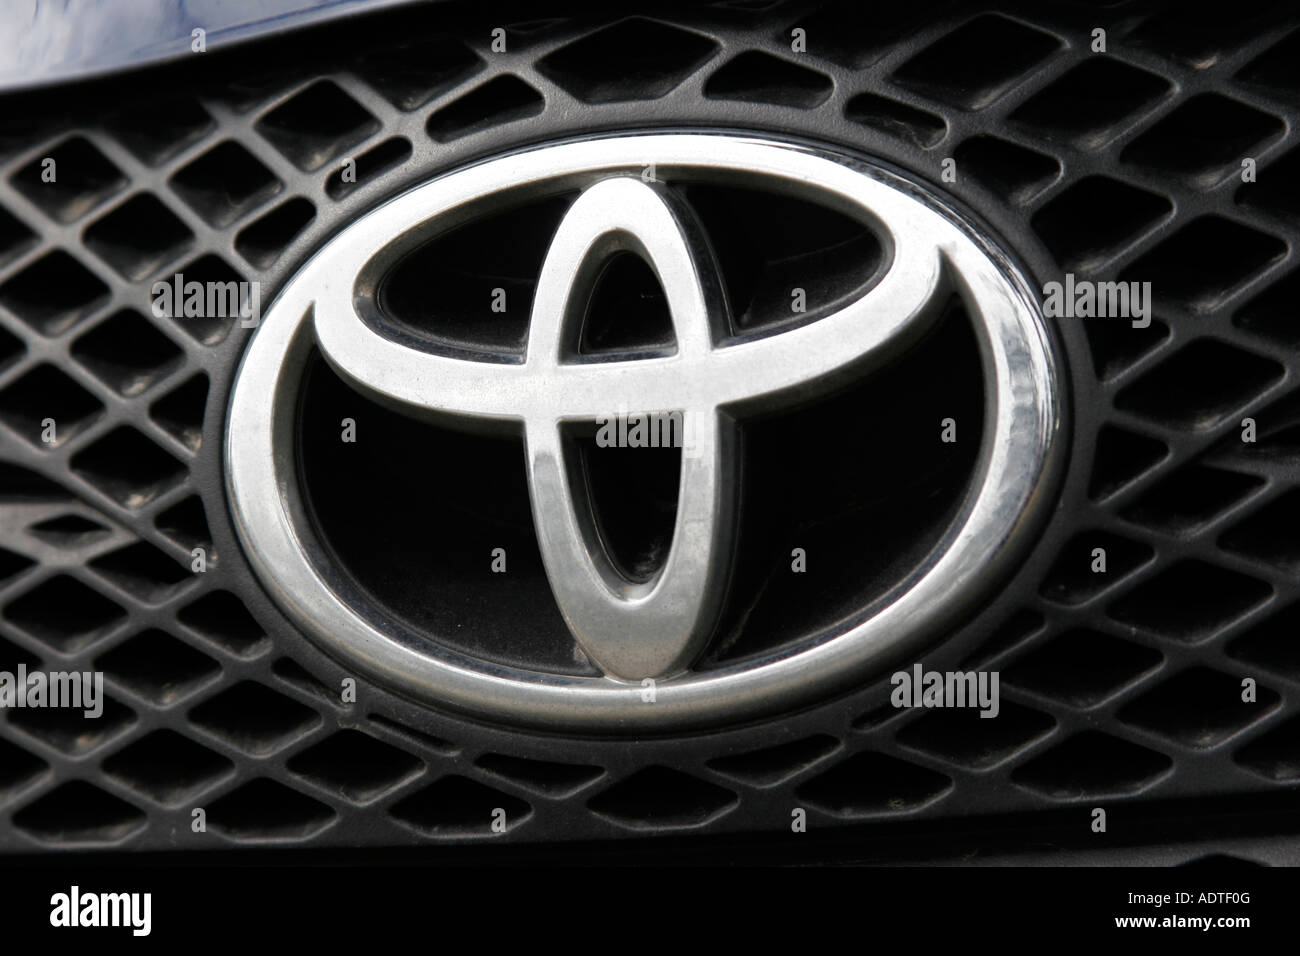 Toyota logo on a Corolla model Stock Photo